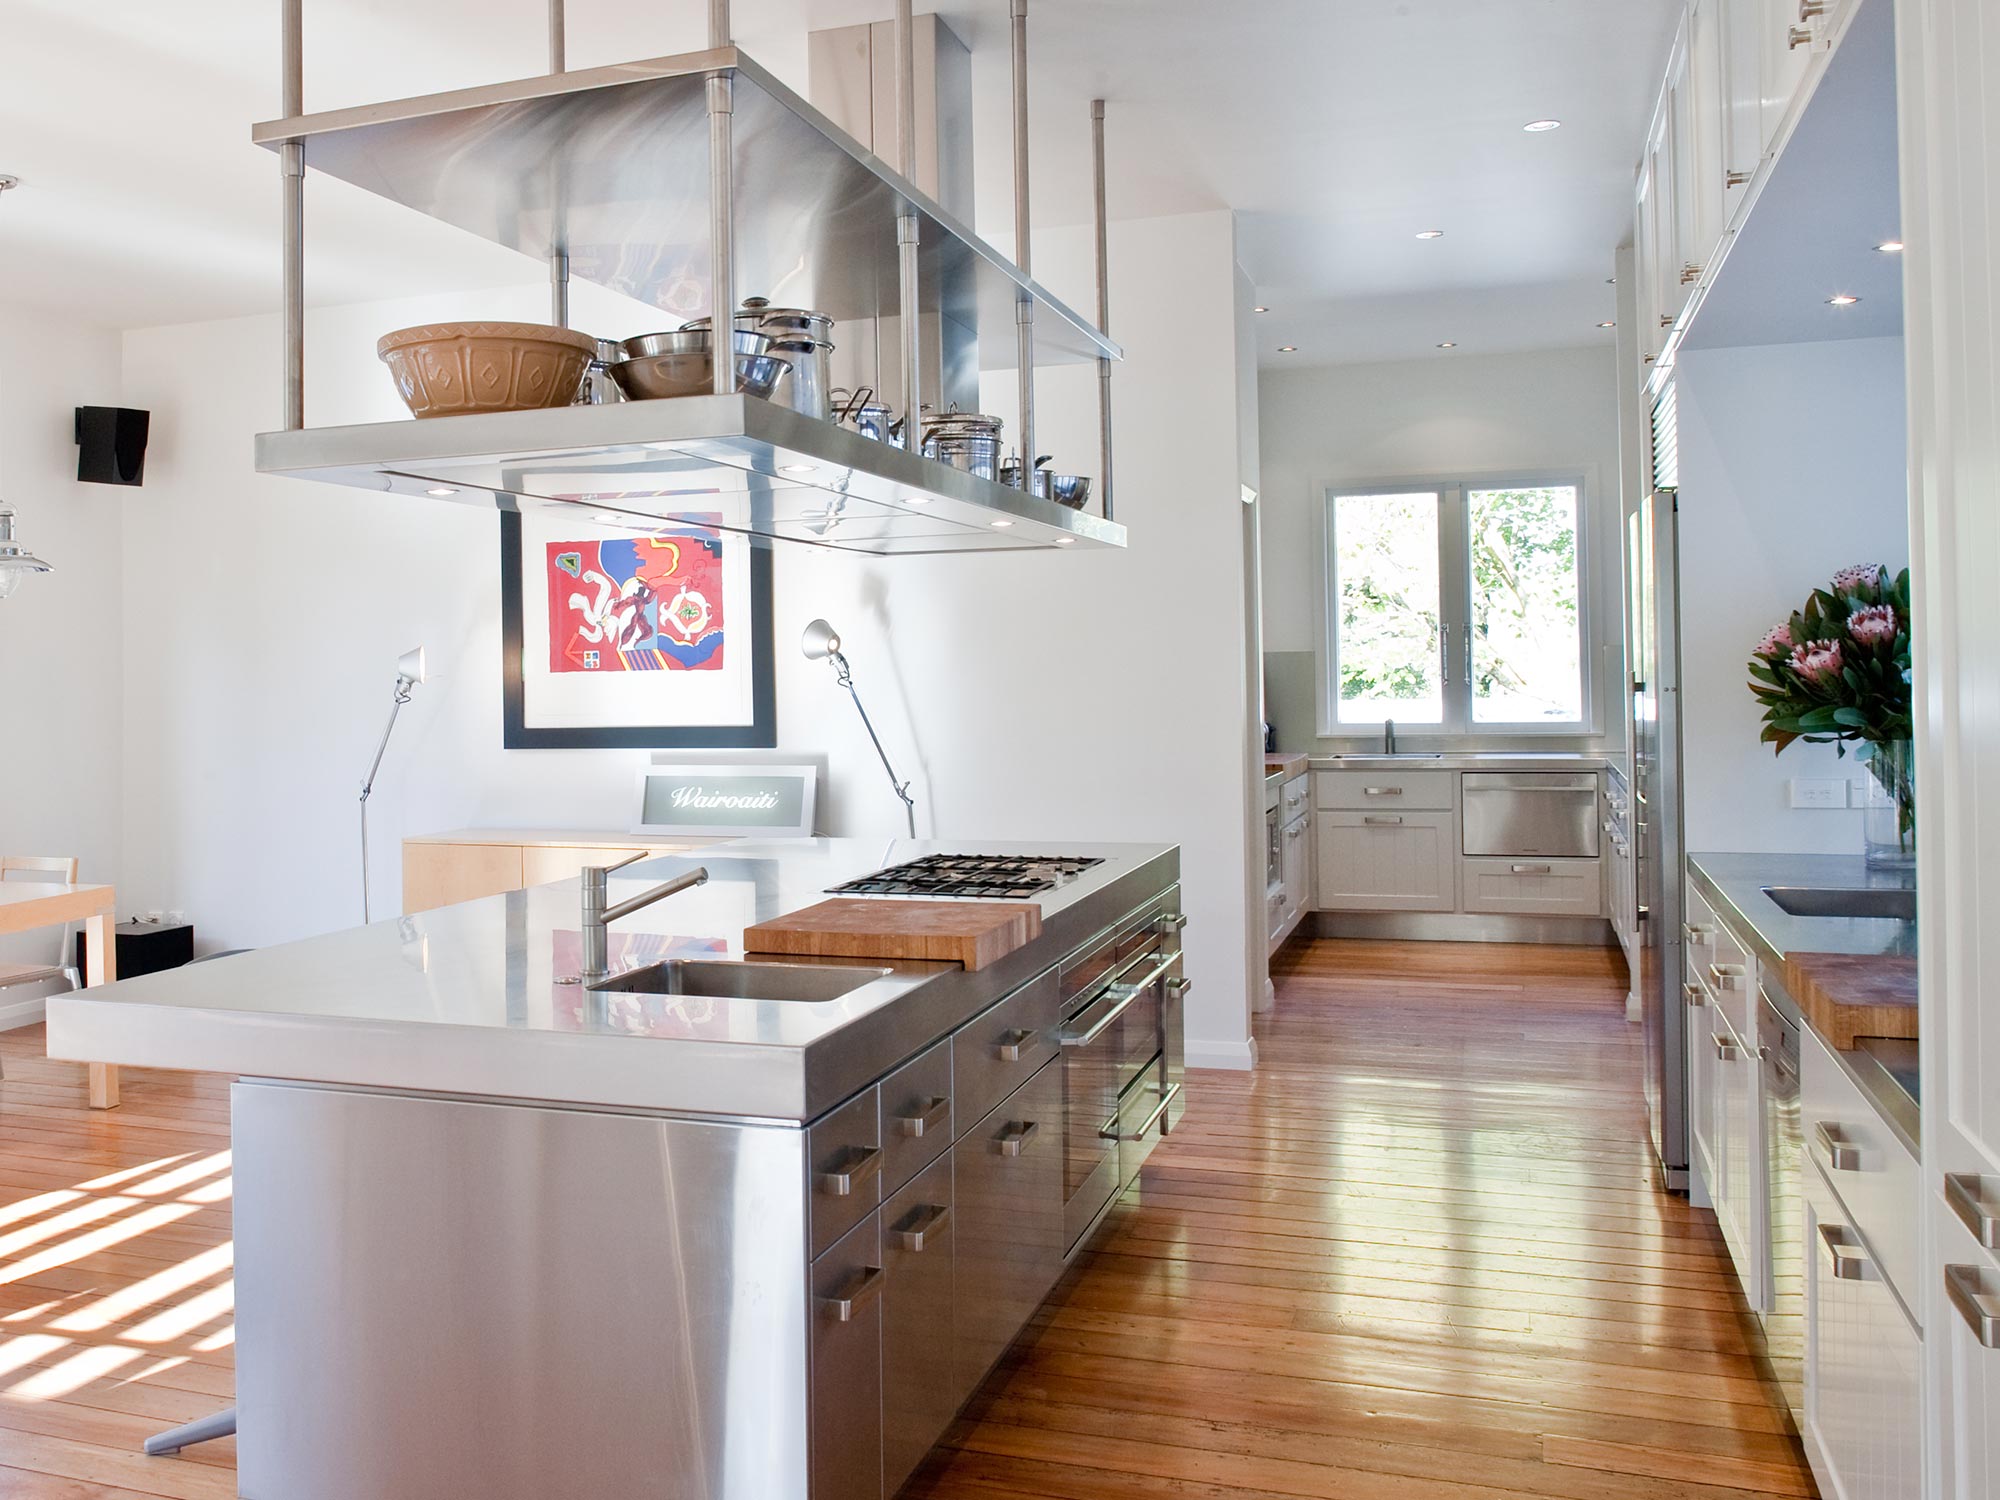 architectural range hoods domestic kitchen